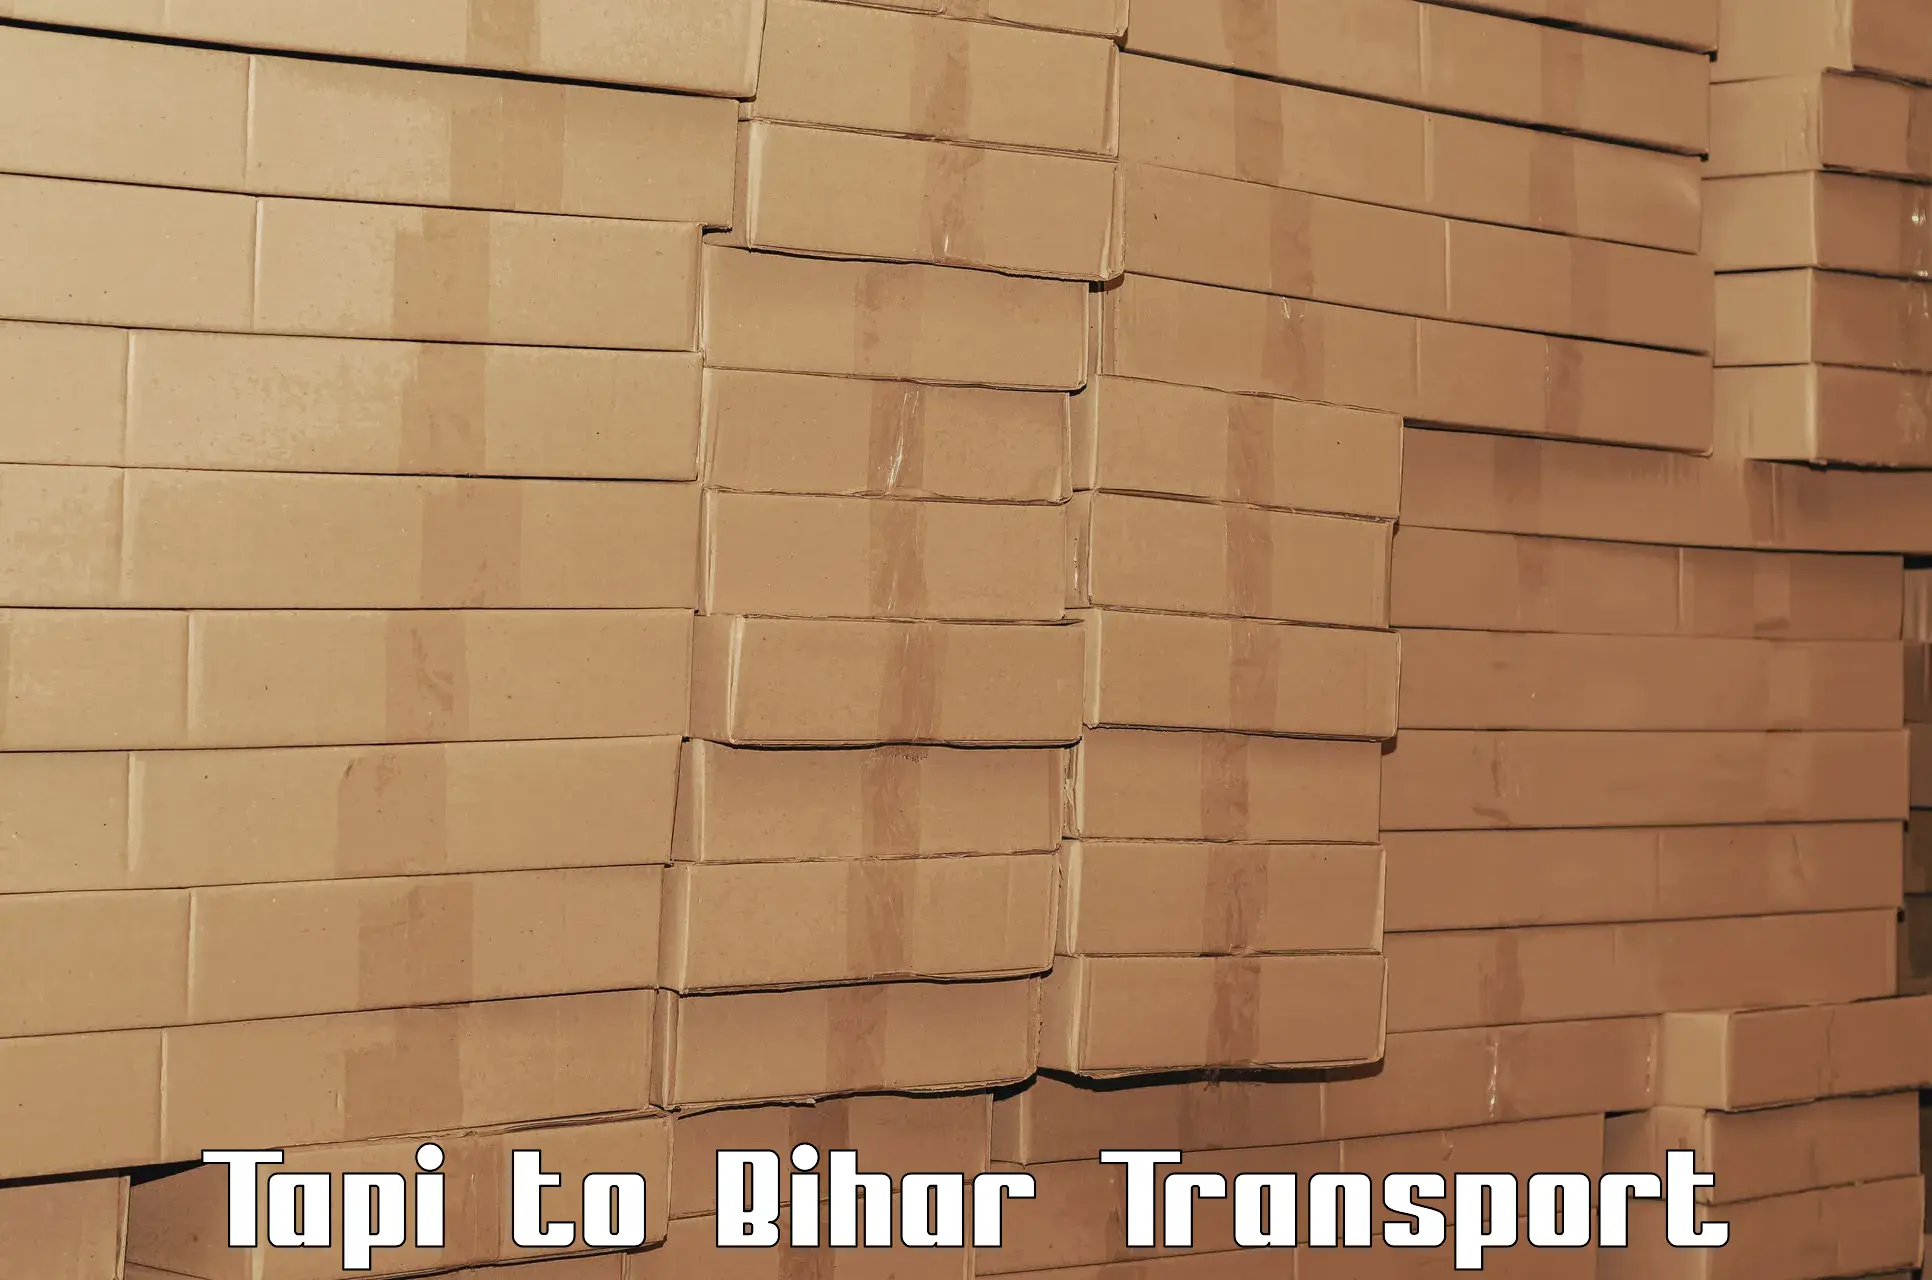 Transport in sharing Tapi to Bankipore